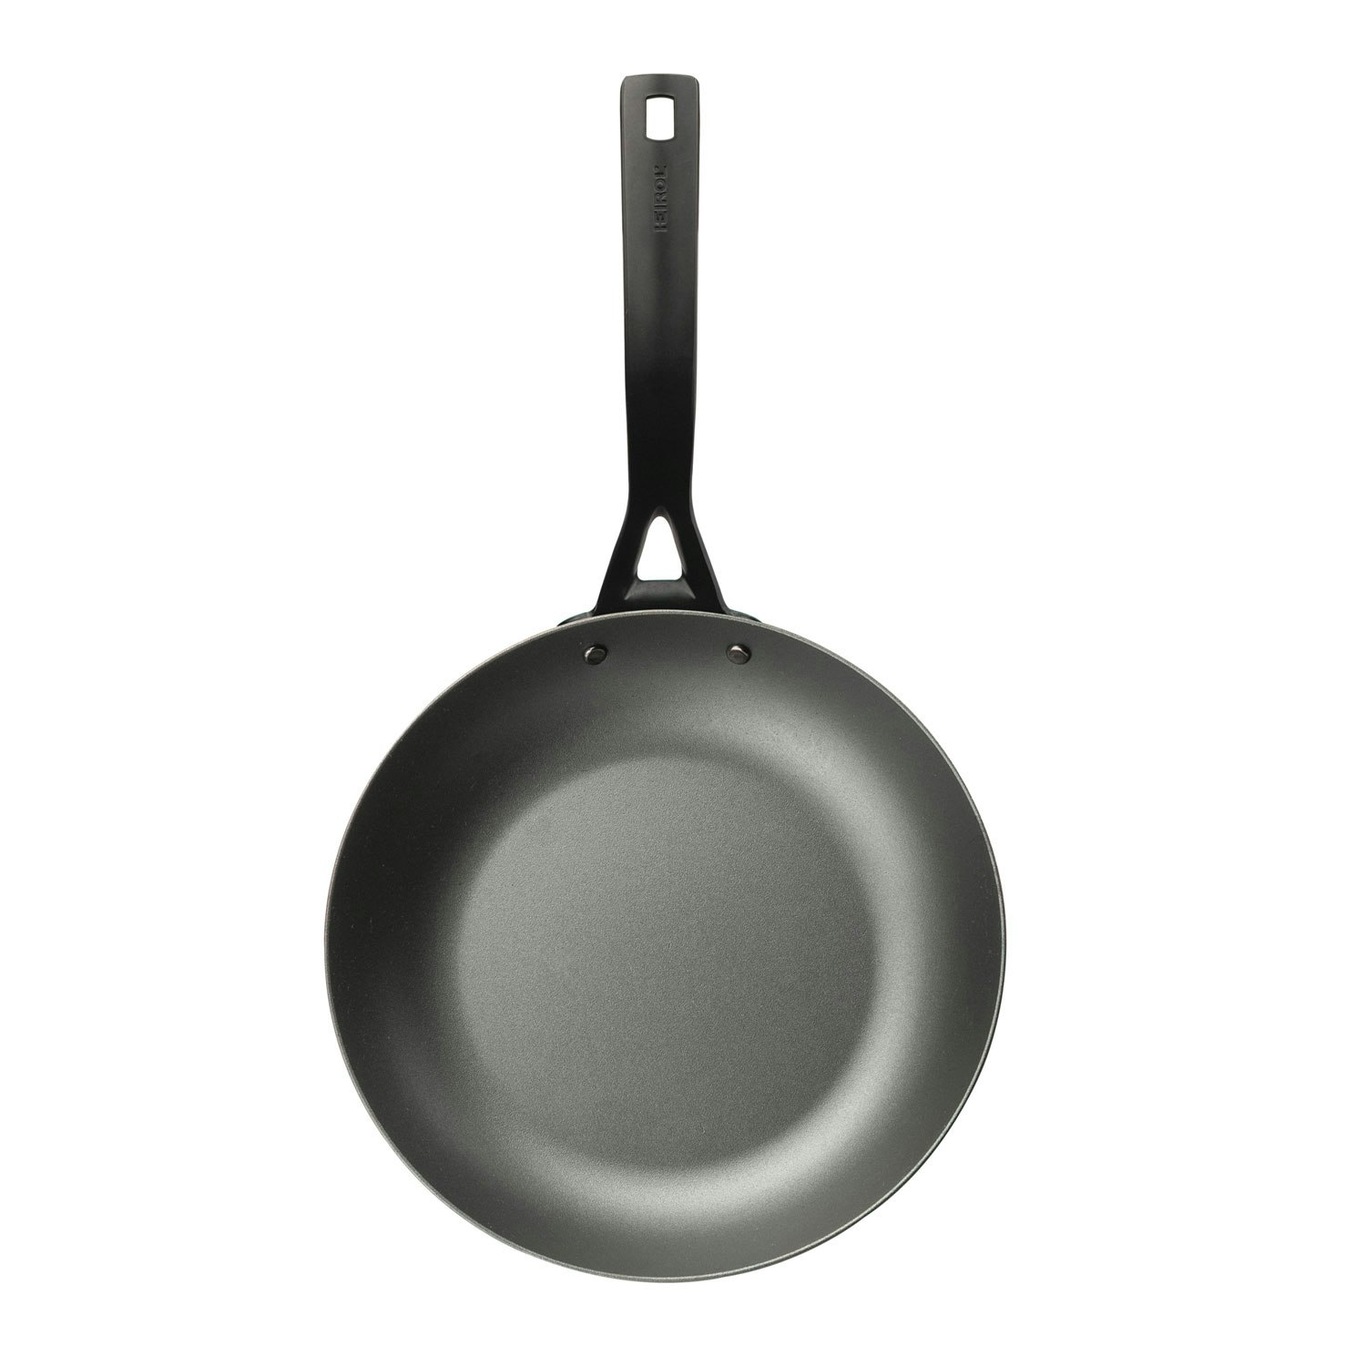 Blacksteel Pro Frying Pan, 28 cm